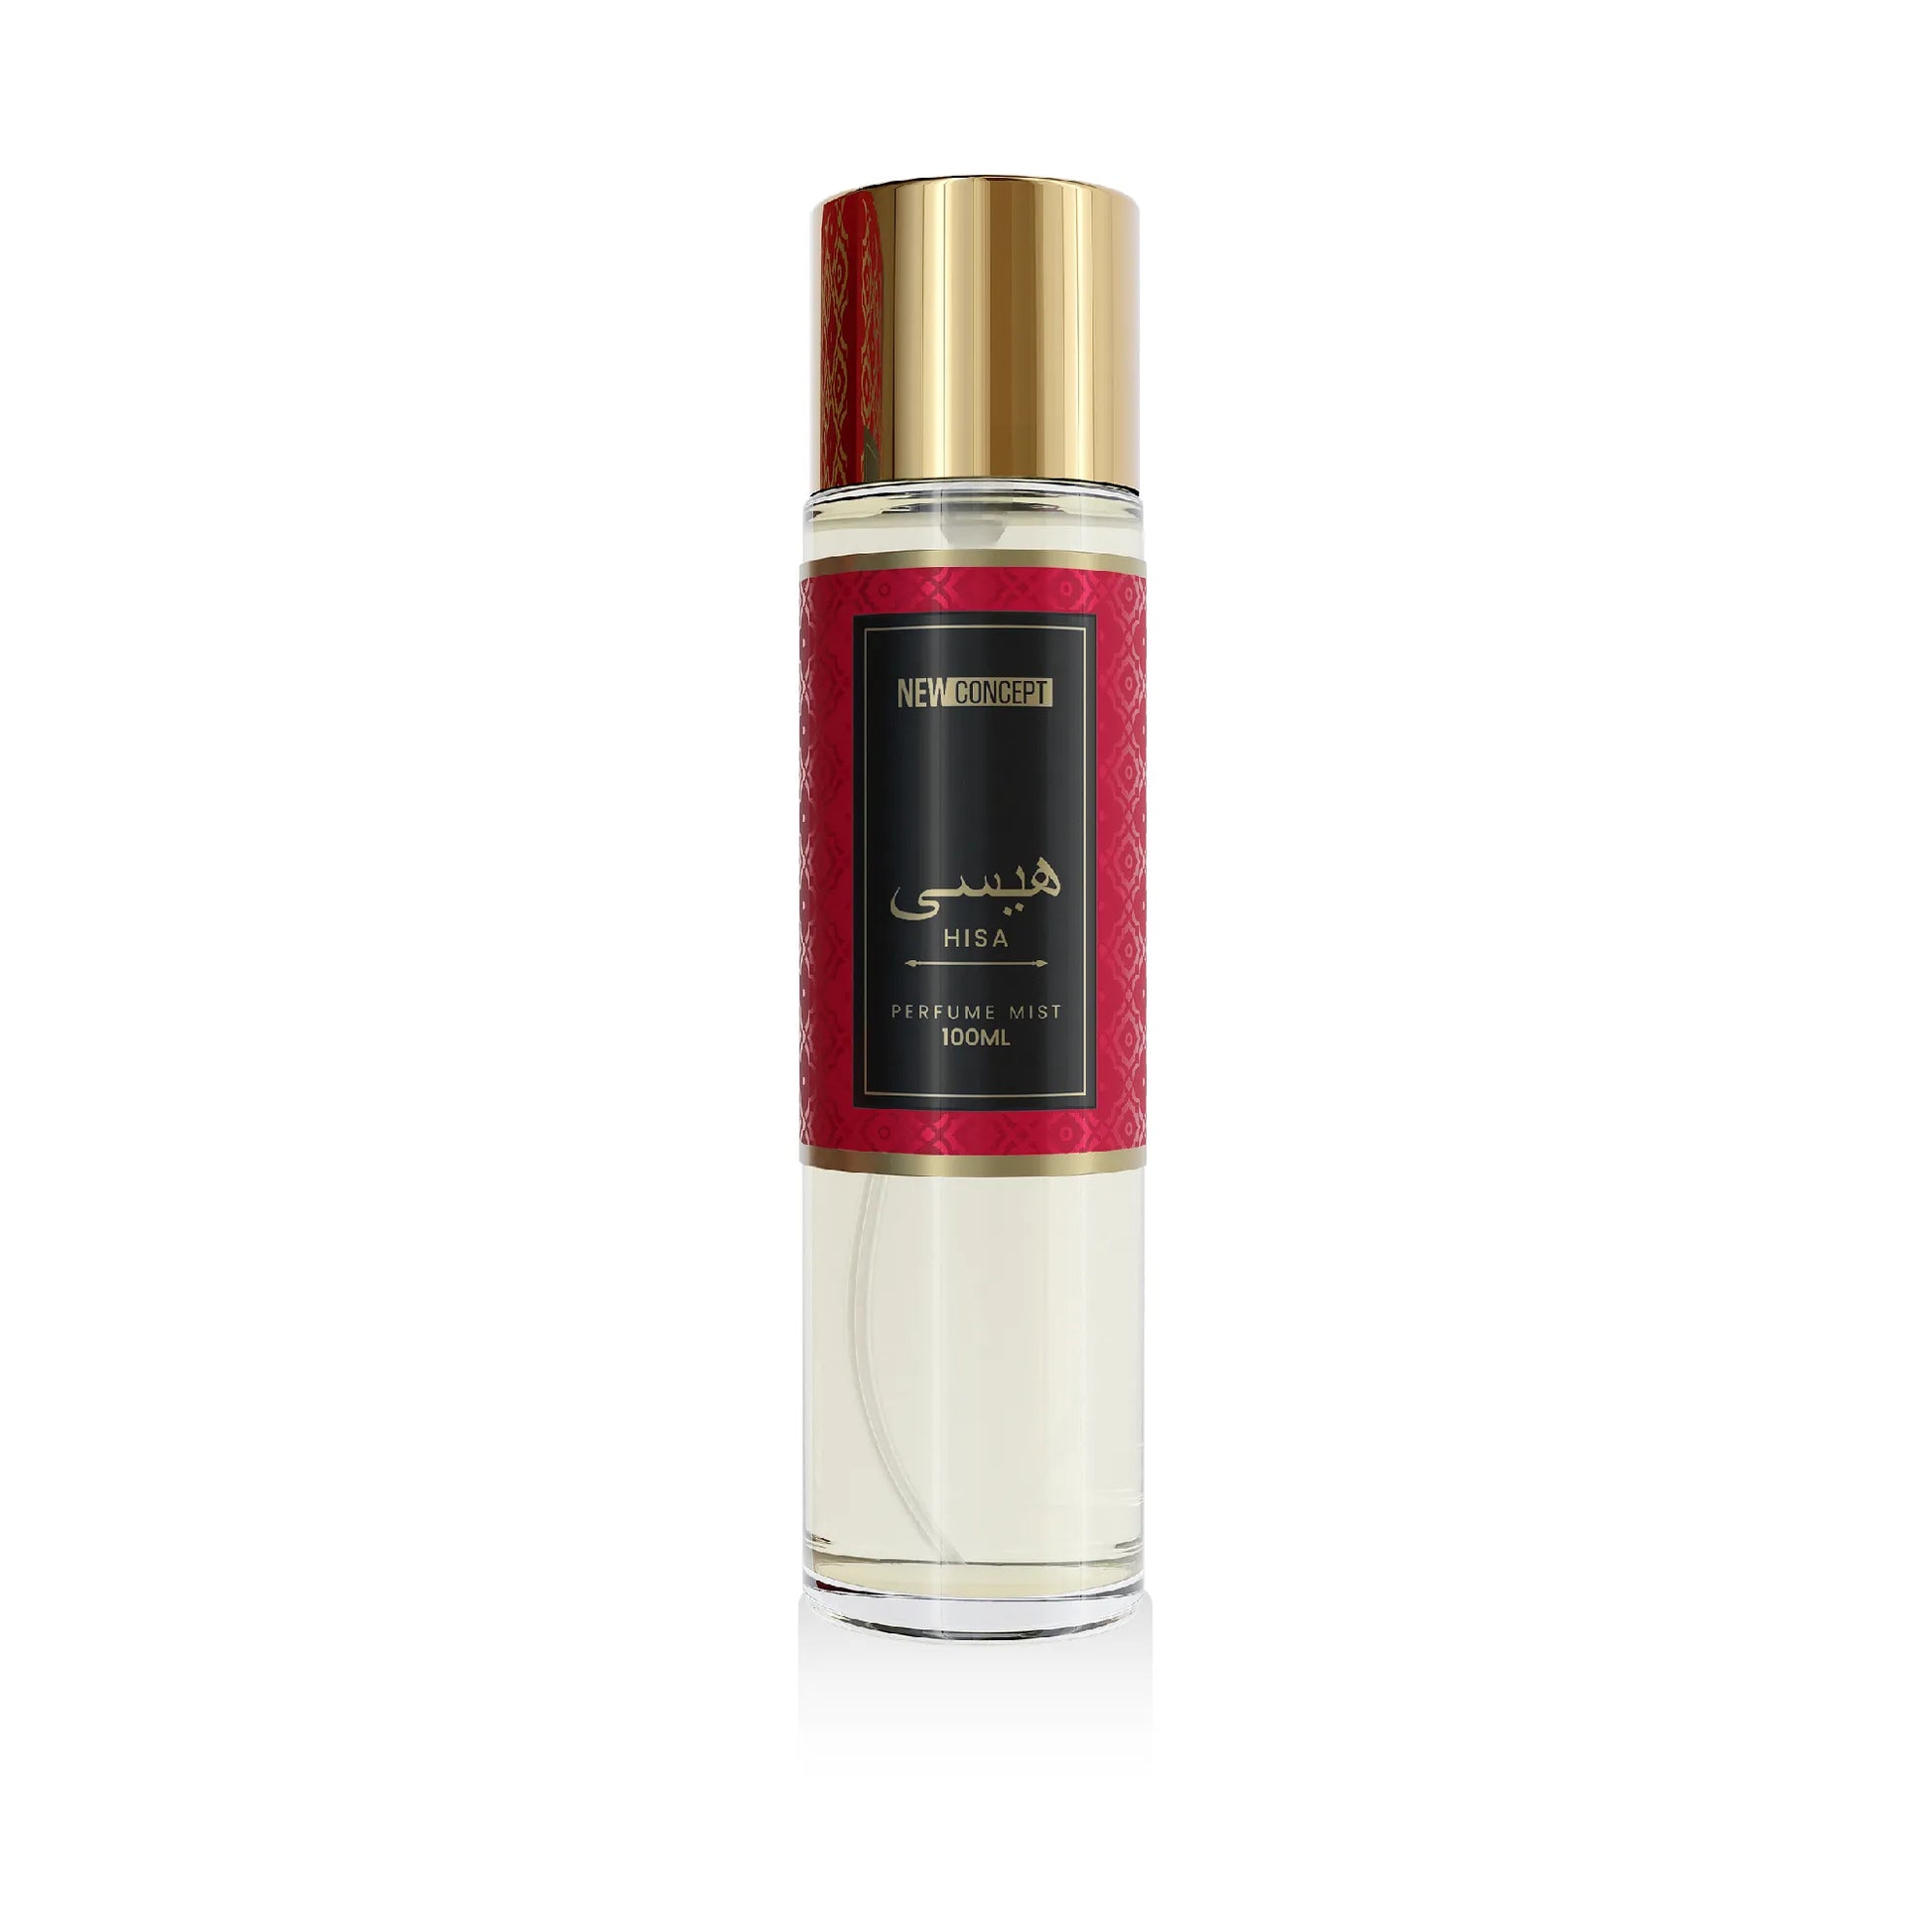 HISA 100ml, Premium - Fragancia Arabe. NewConcept Perfume Mist, duración media, hasta X 6hrs. Orientica Amber Rouge / Baccarat Rouge